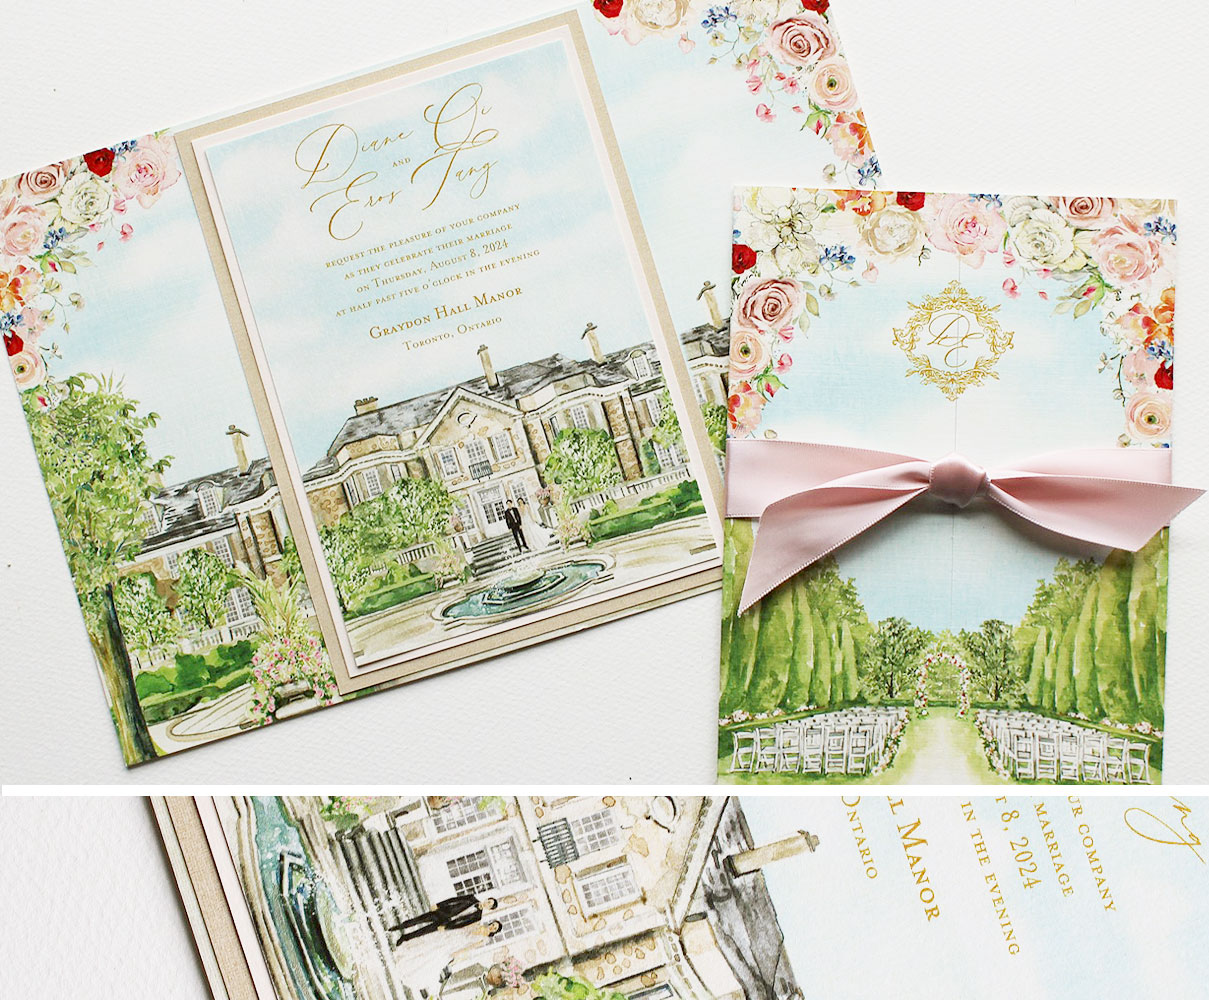 graydon-manor-wedding-invitations